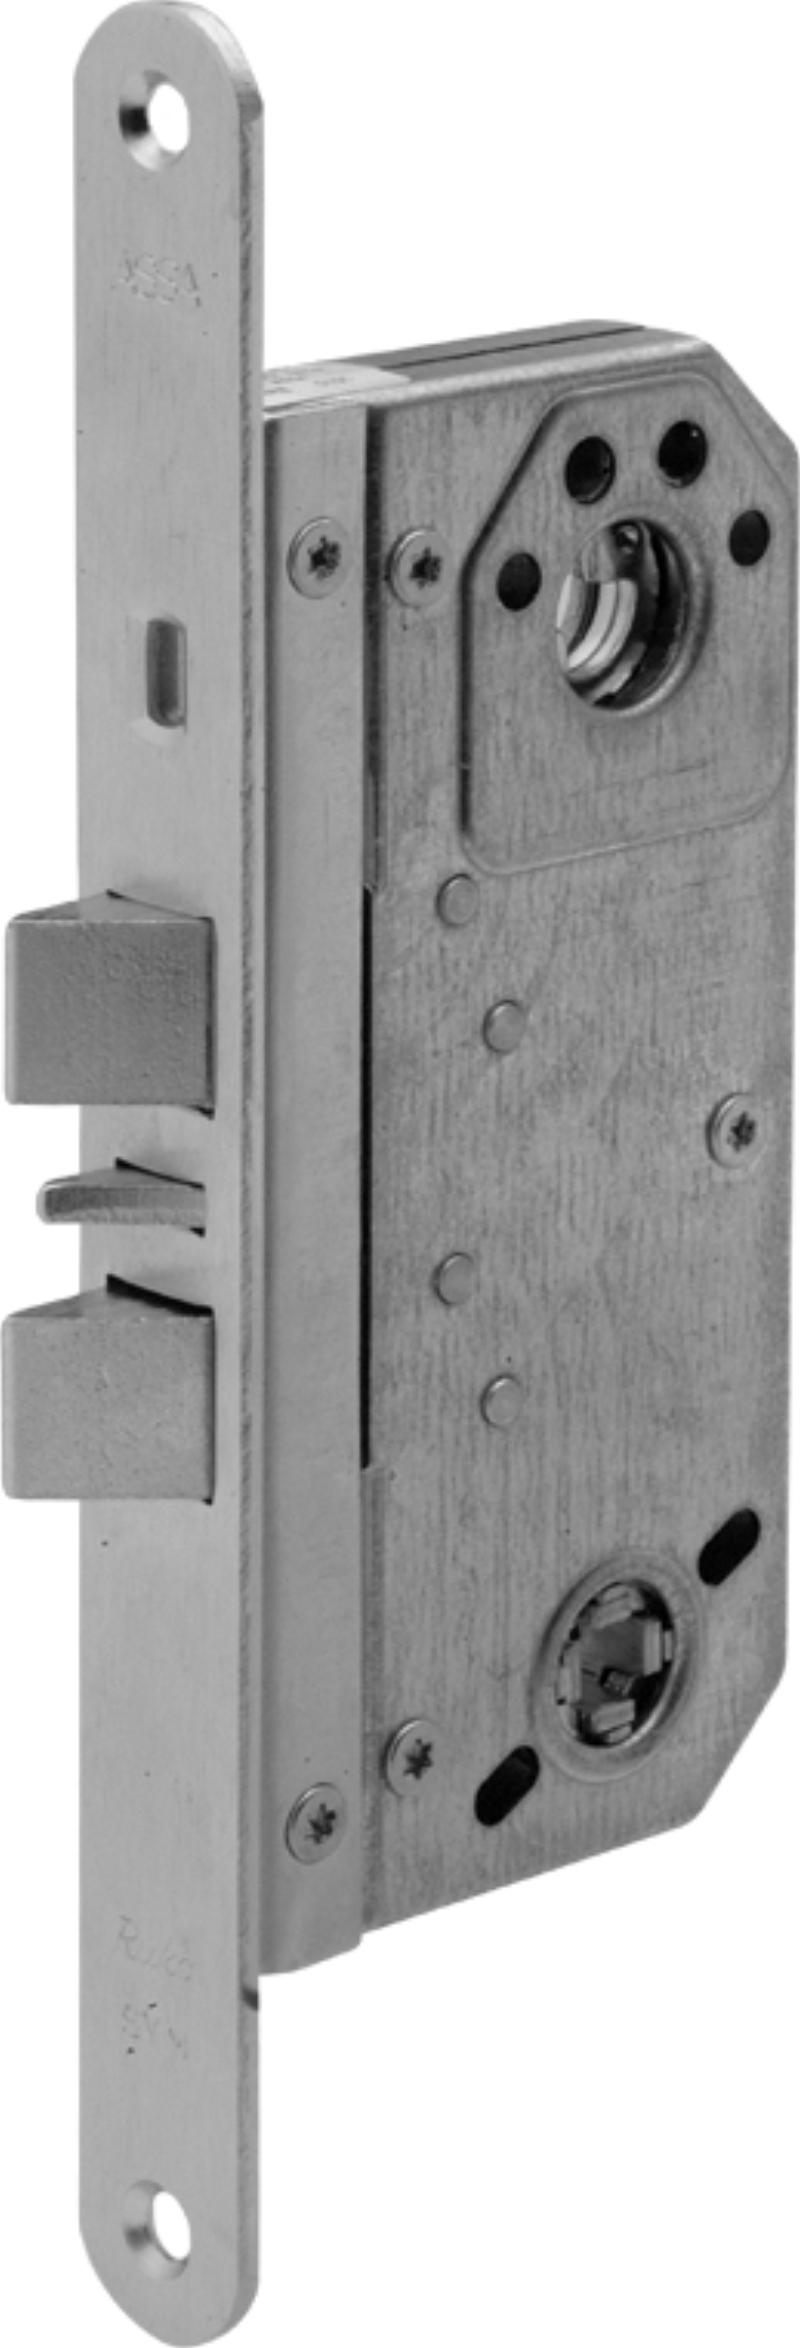 Assa lock case 1560 u/tin